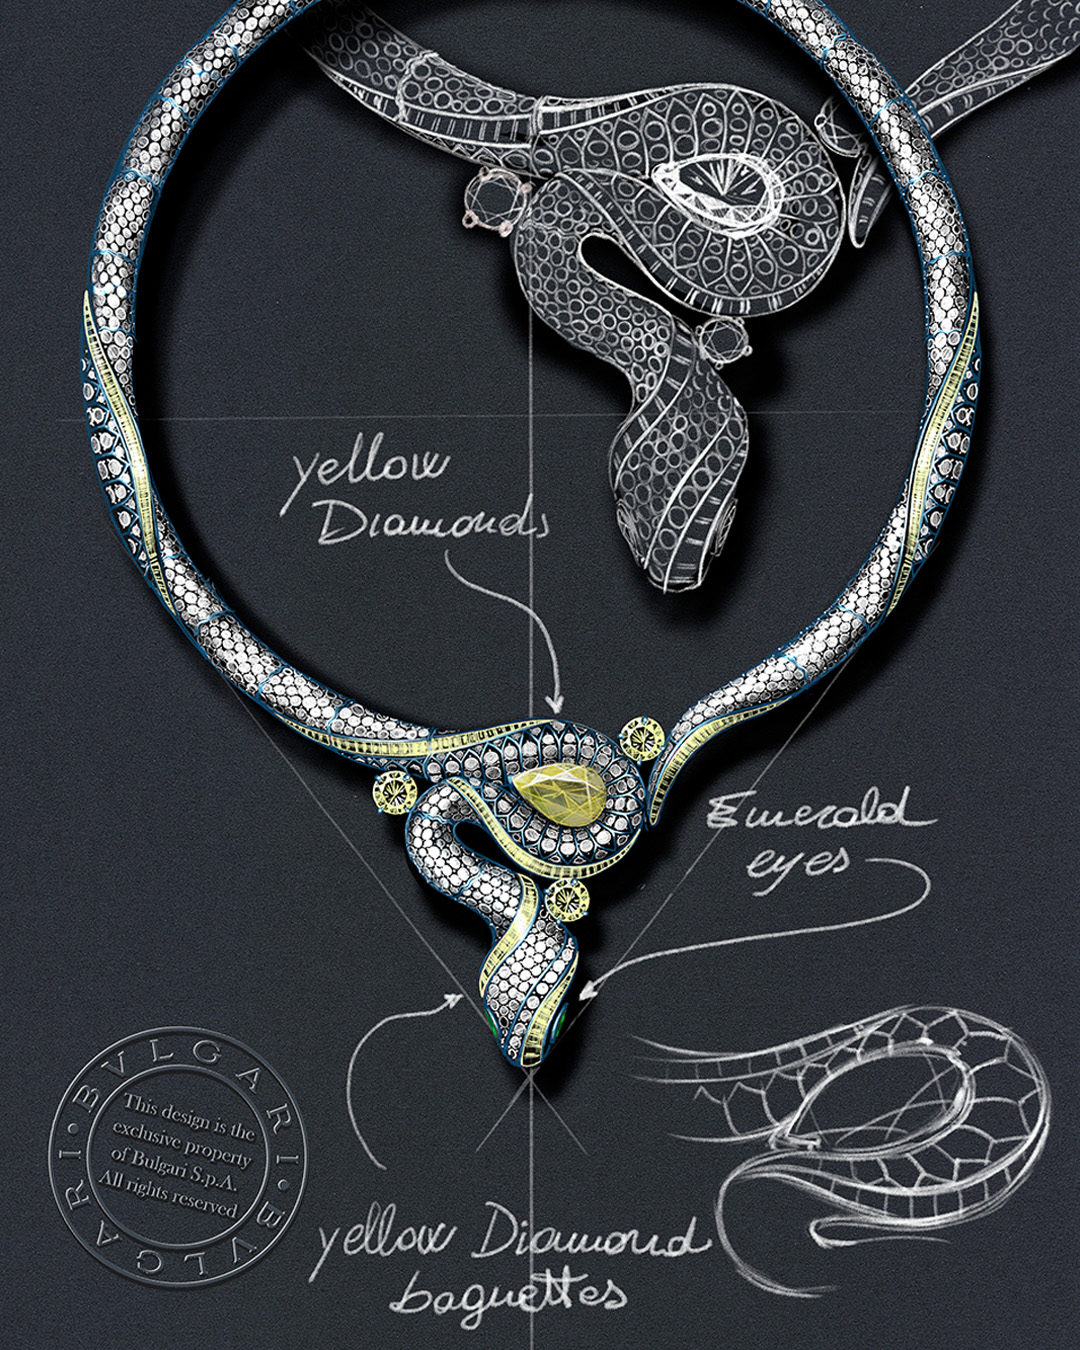 Serpenti diamond high jewellery necklace, Bulgari